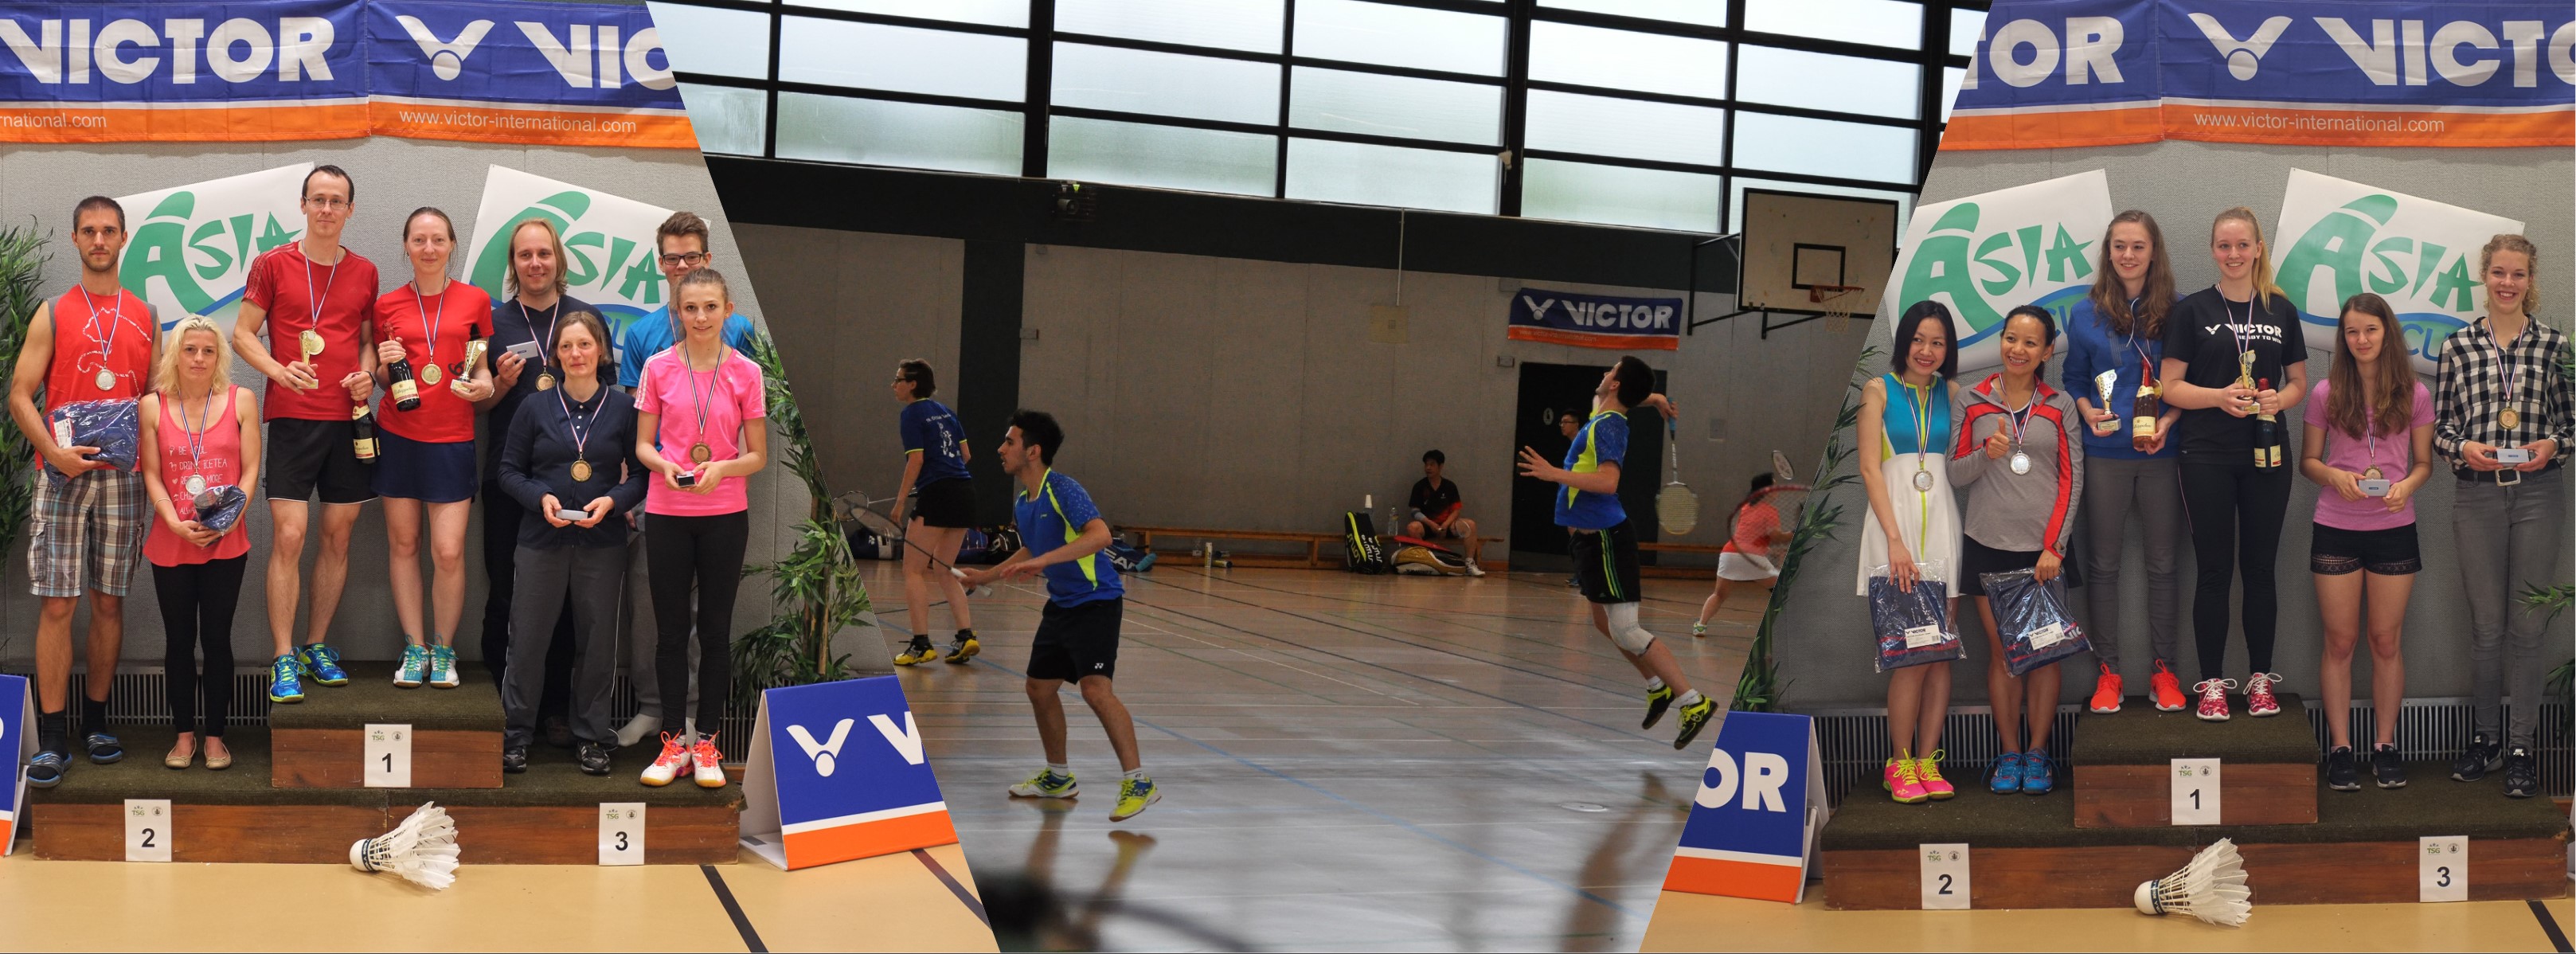 VICTOR Netz B National Badminton Federball Turnier Tournament Halle Verein 